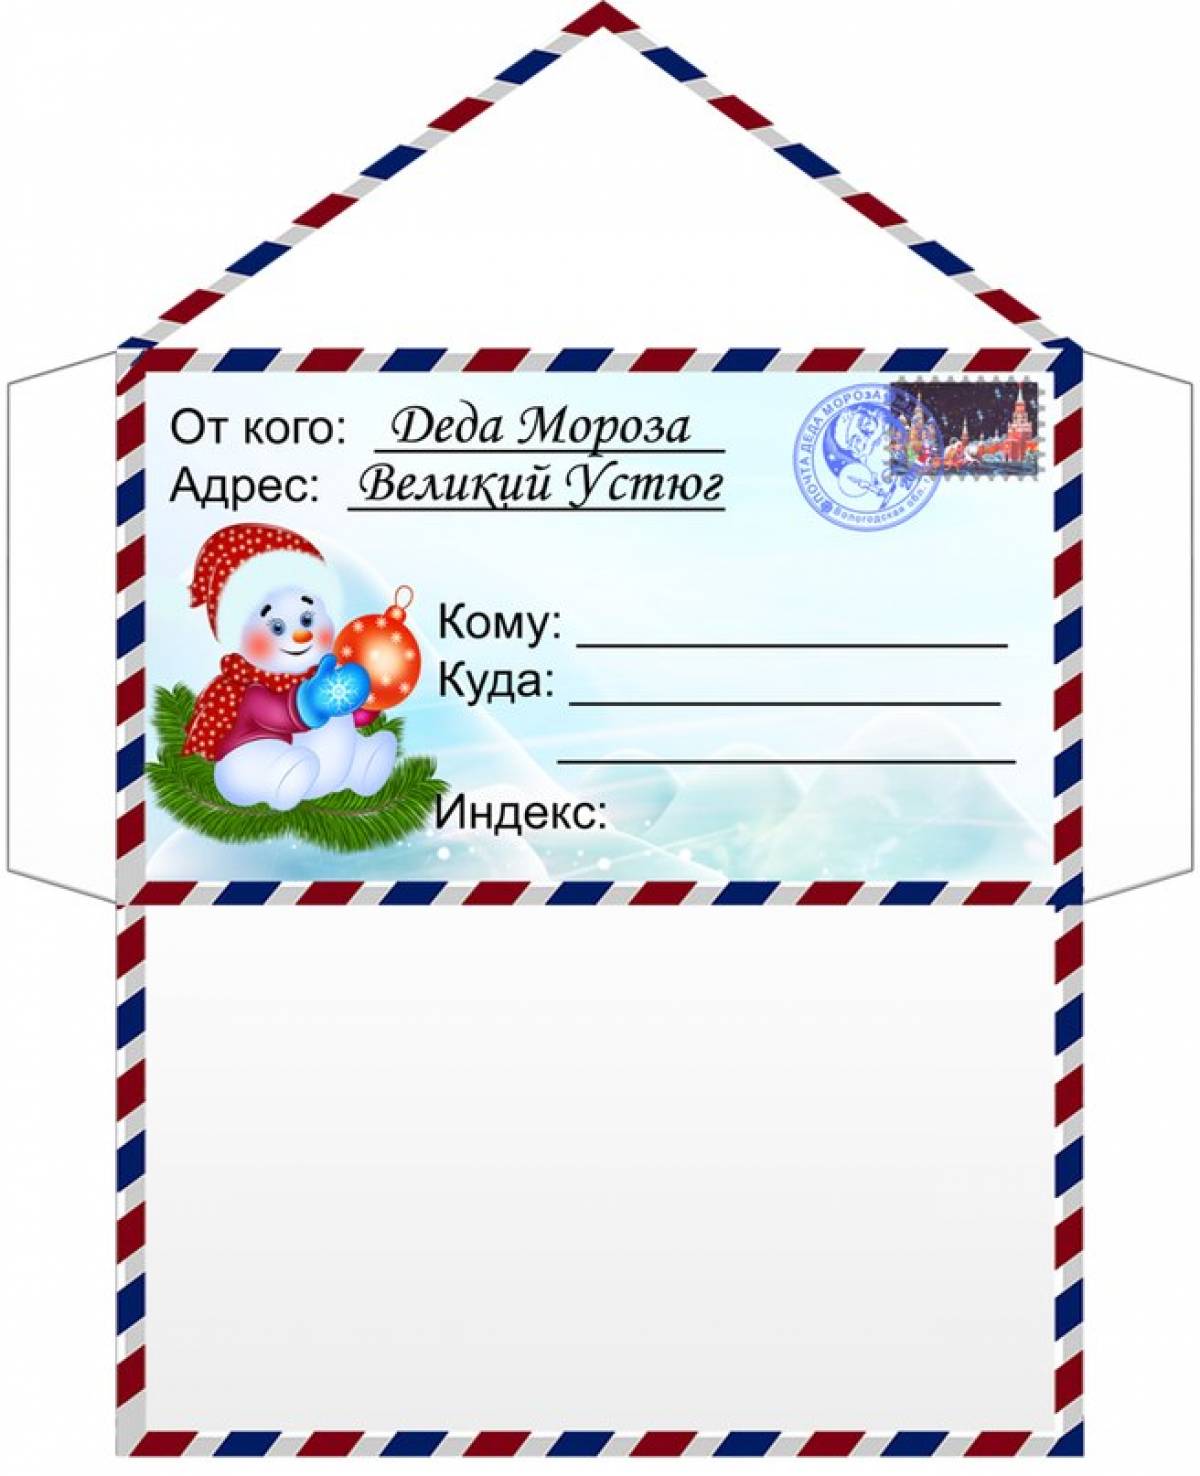 Santa Claus envelope with a snowman